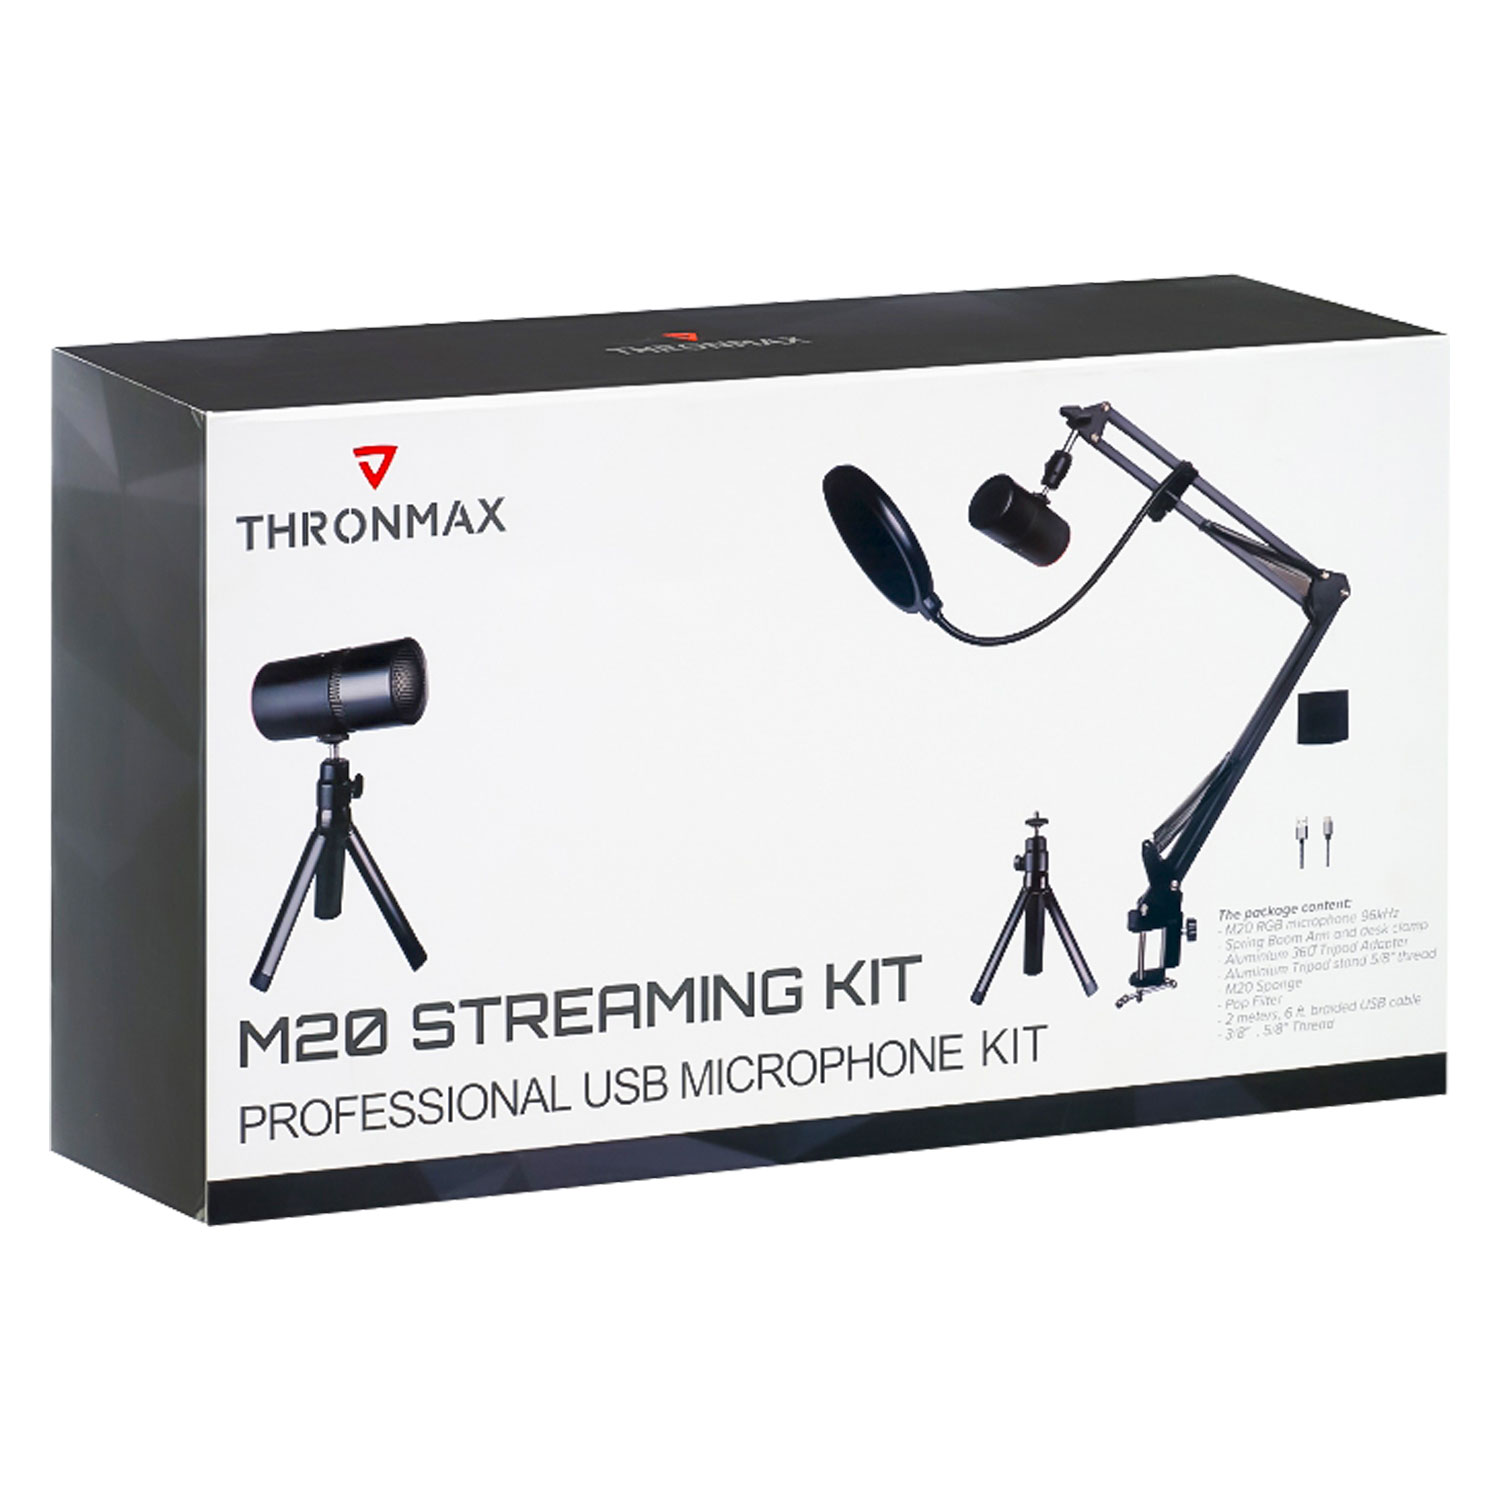 Microfone Thronmax Kit M20 Streaming USB 96KHZ (977933)